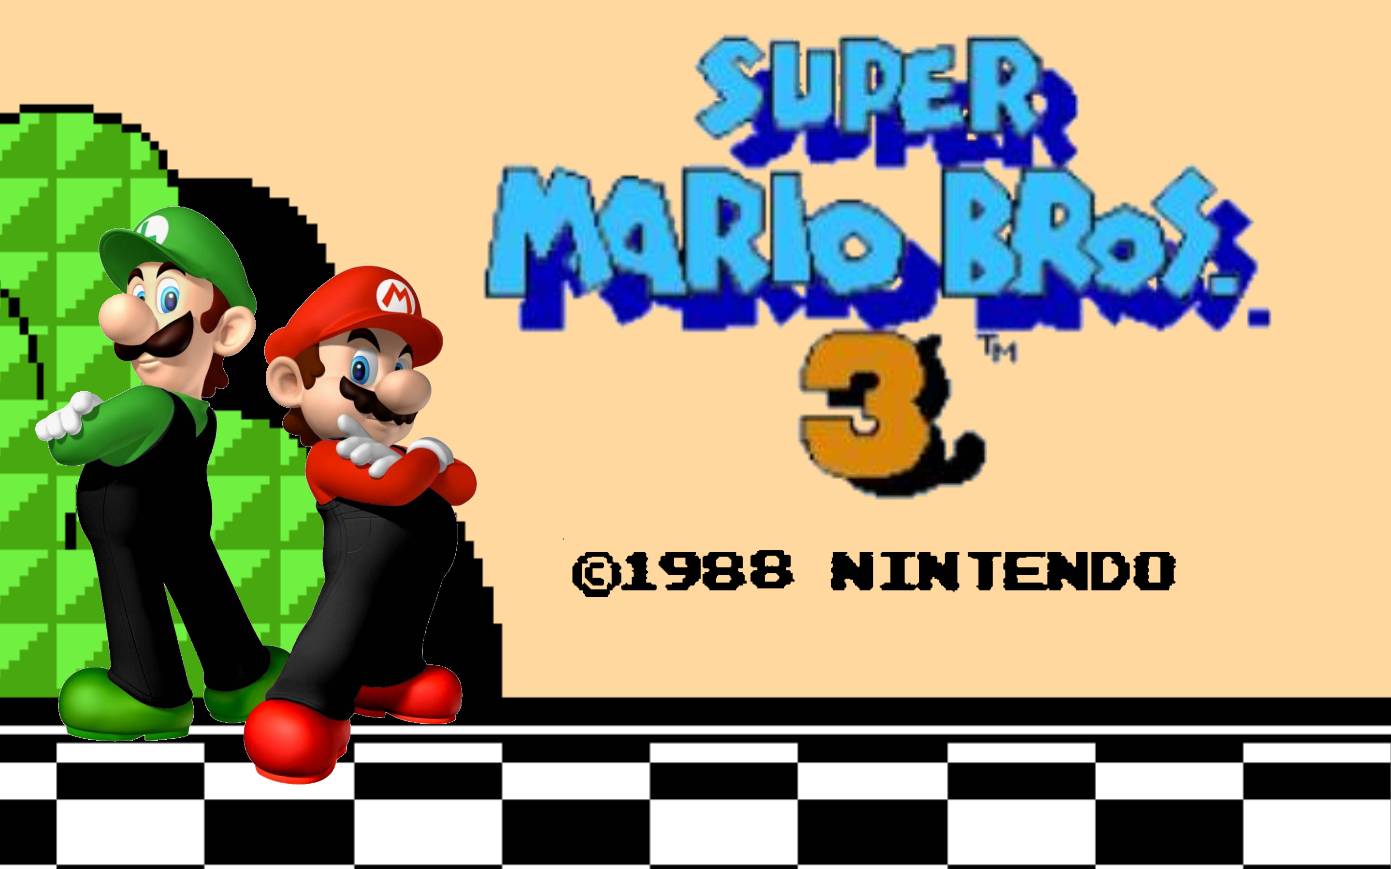 NES] Super Mario Bros 3 (mini-game) - Mario! by nintentofu on DeviantArt